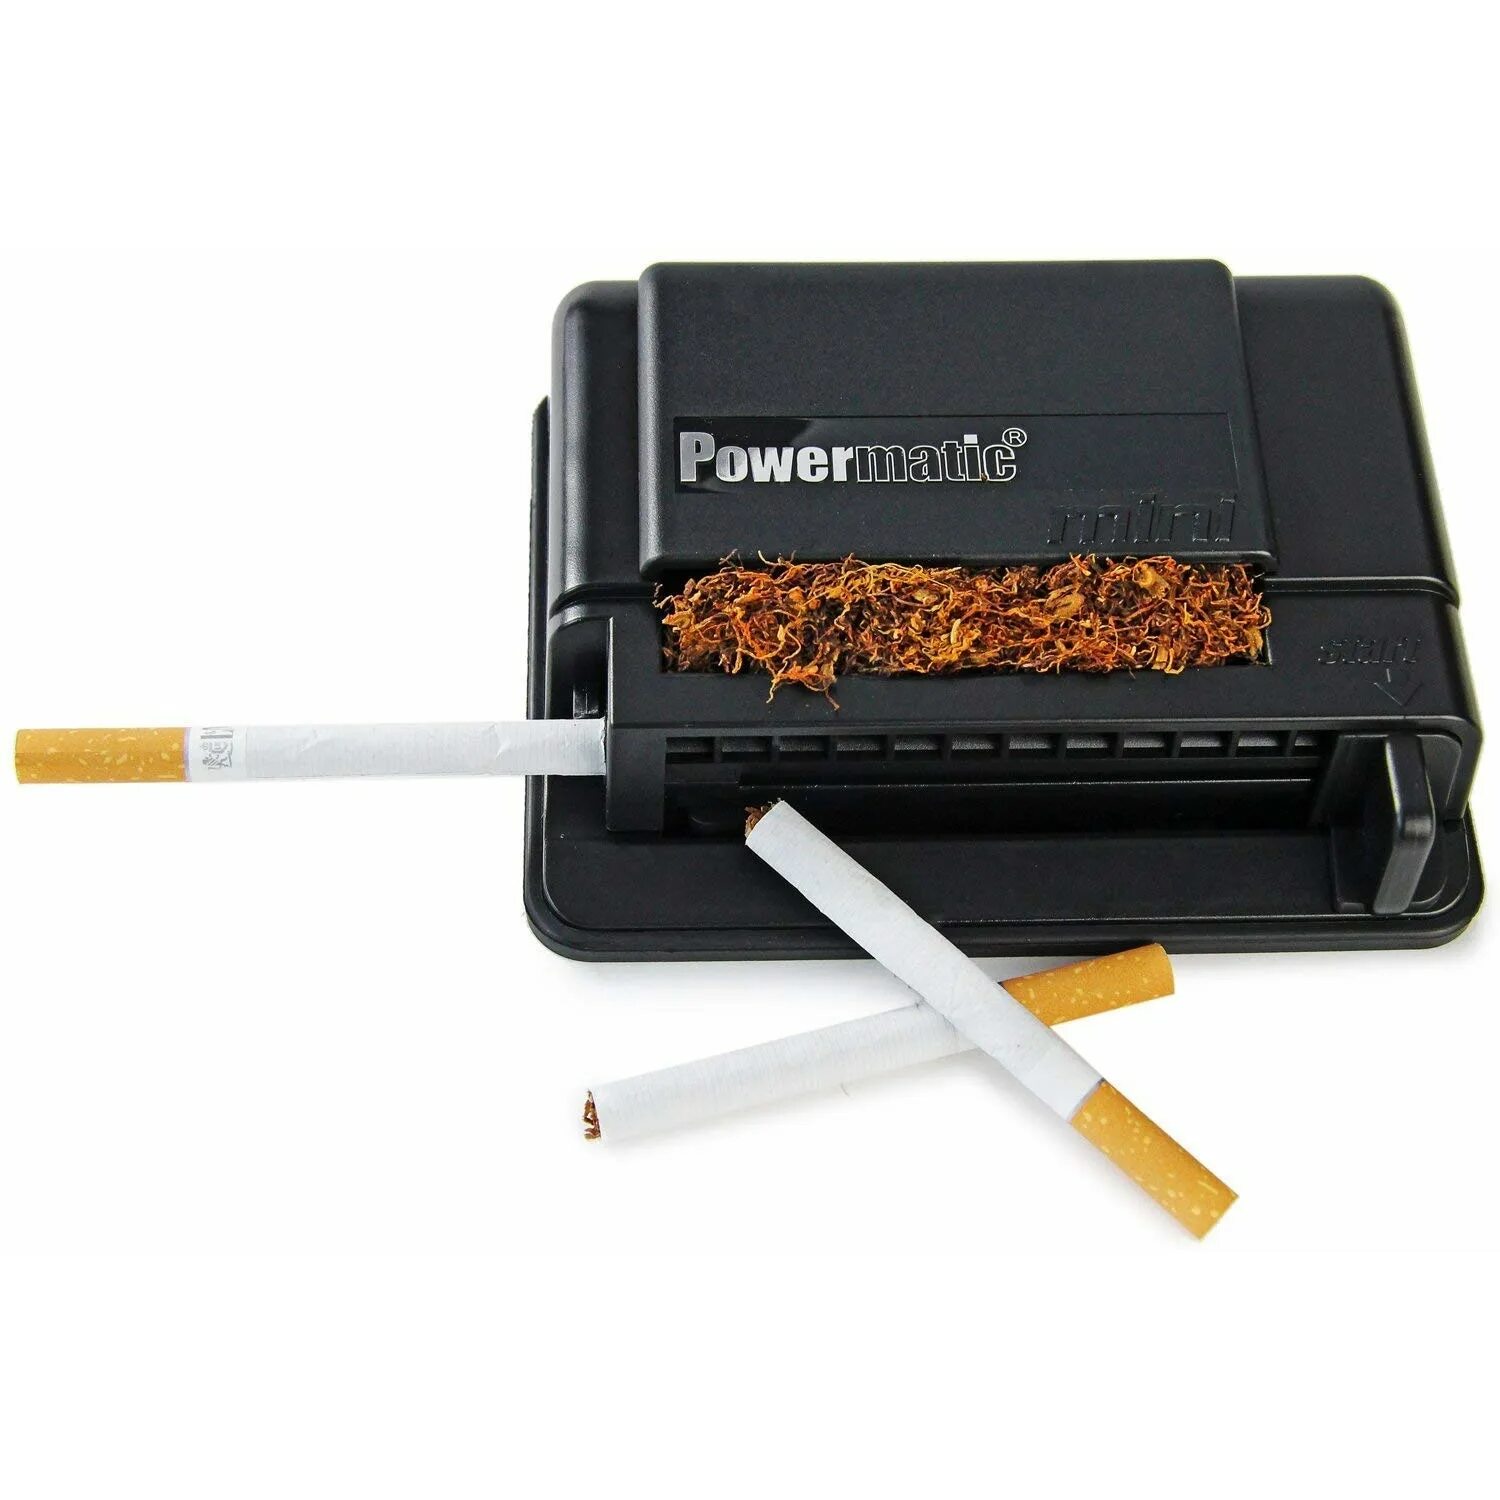 Табак для сигаретных гильз. Powermatic Mini машинка для сигарет. Машинка для набивки сигарет Powermatic Mini. Машинка для набивки гильз Powermatic Mini. Машинка набивочная Powermatic Mini 03134.